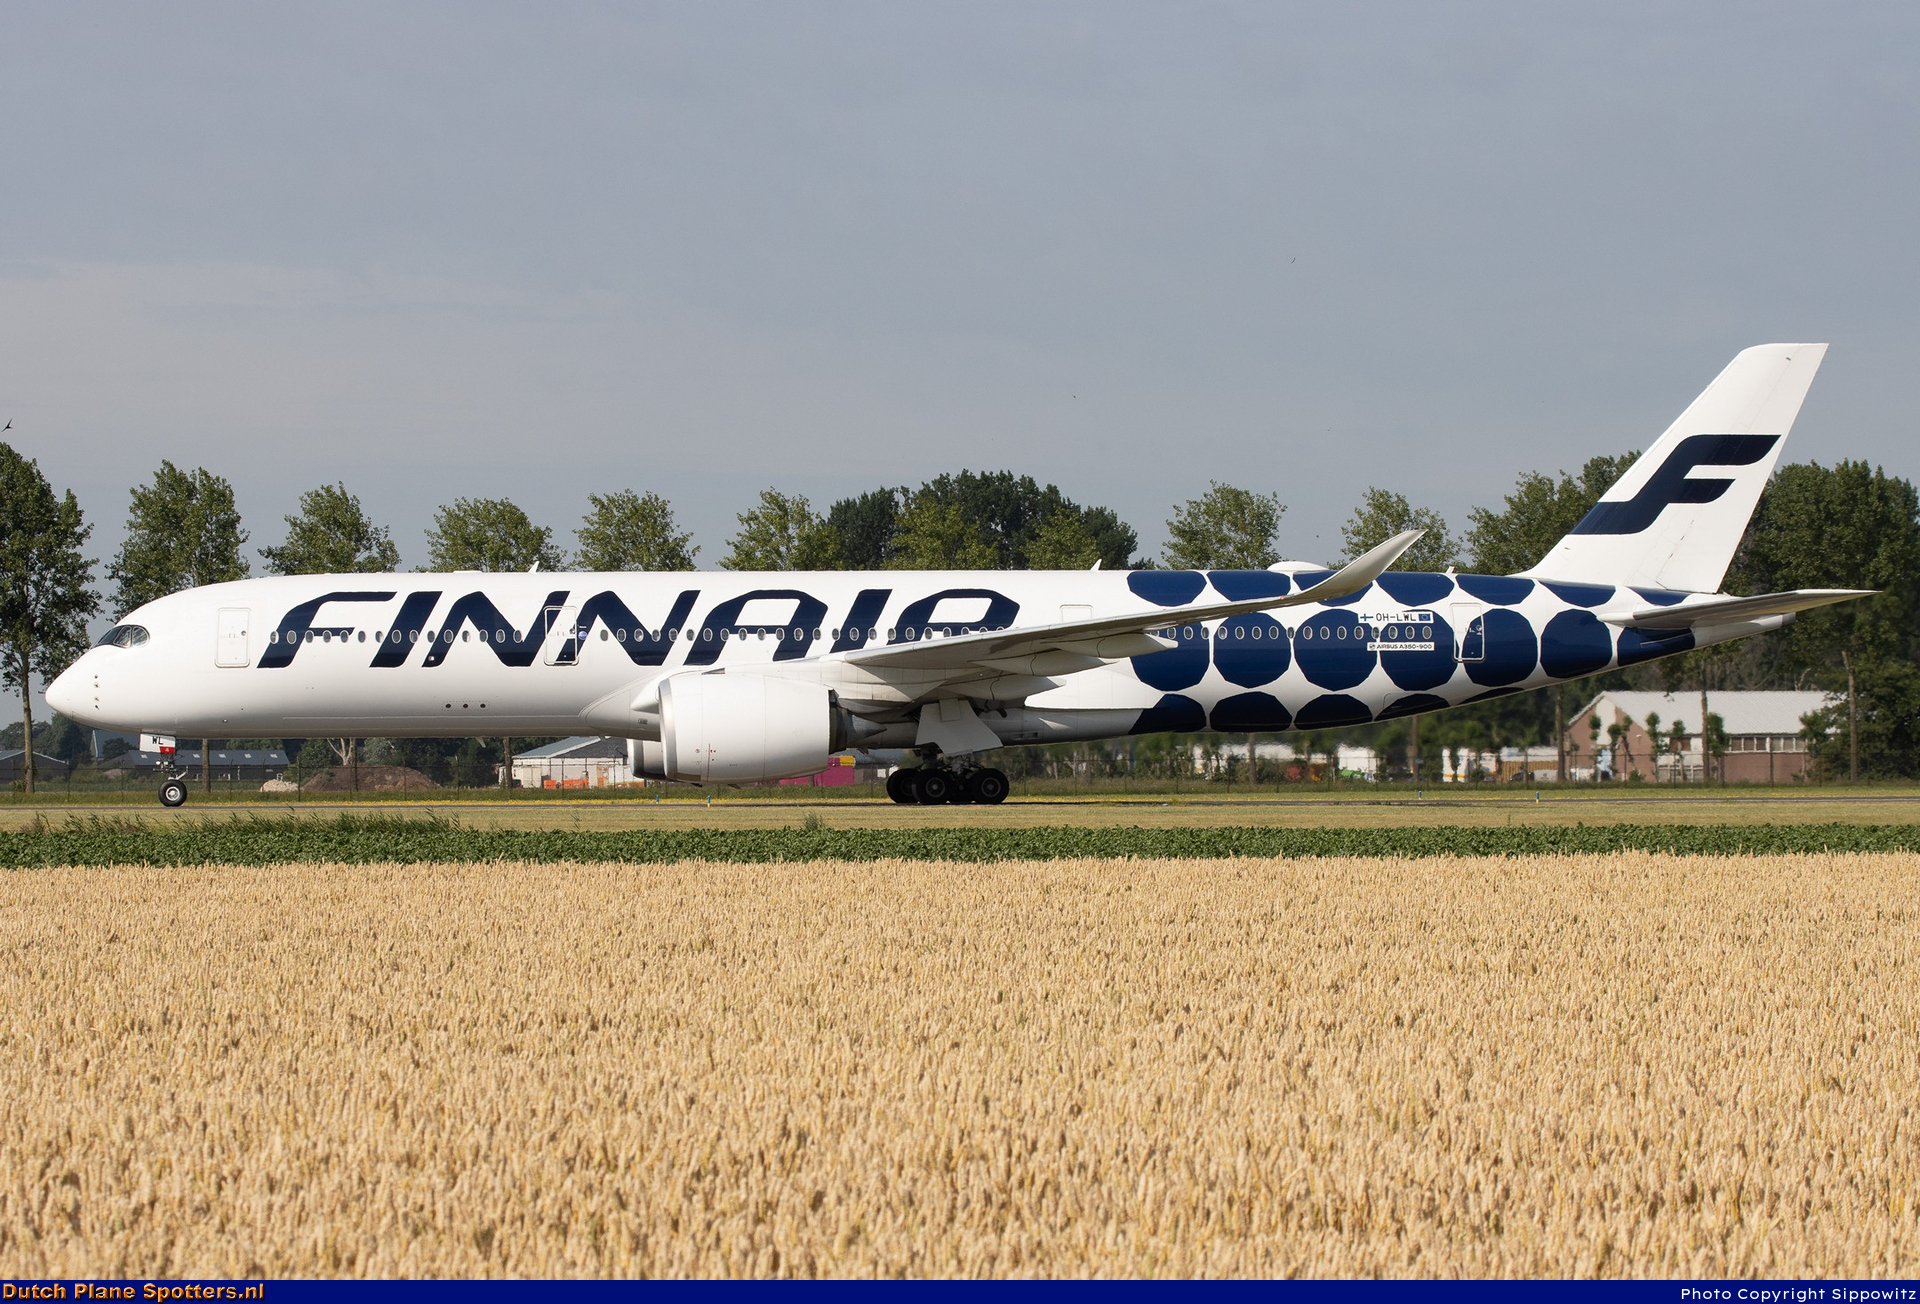 OH-LWL Airbus A350-900 Finnair by Sippowitz